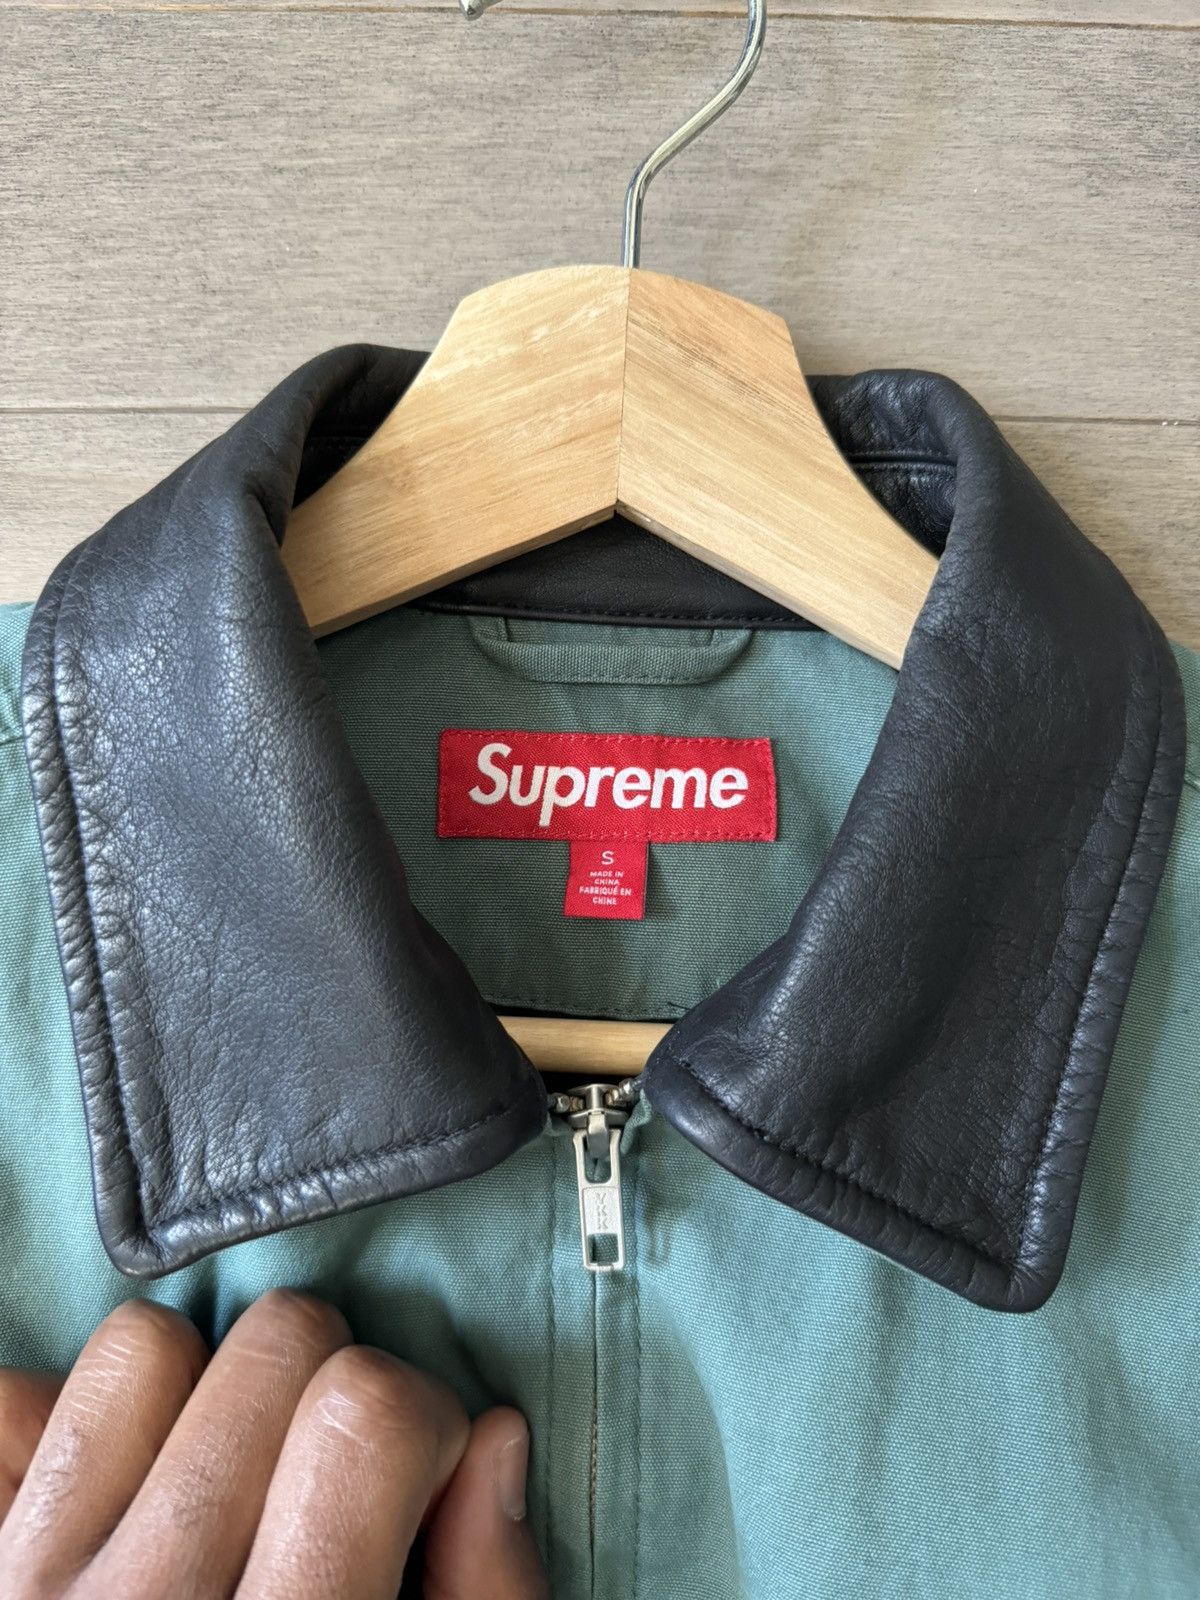 Supreme Supreme Leather Collar Utility Jacket | Grailed